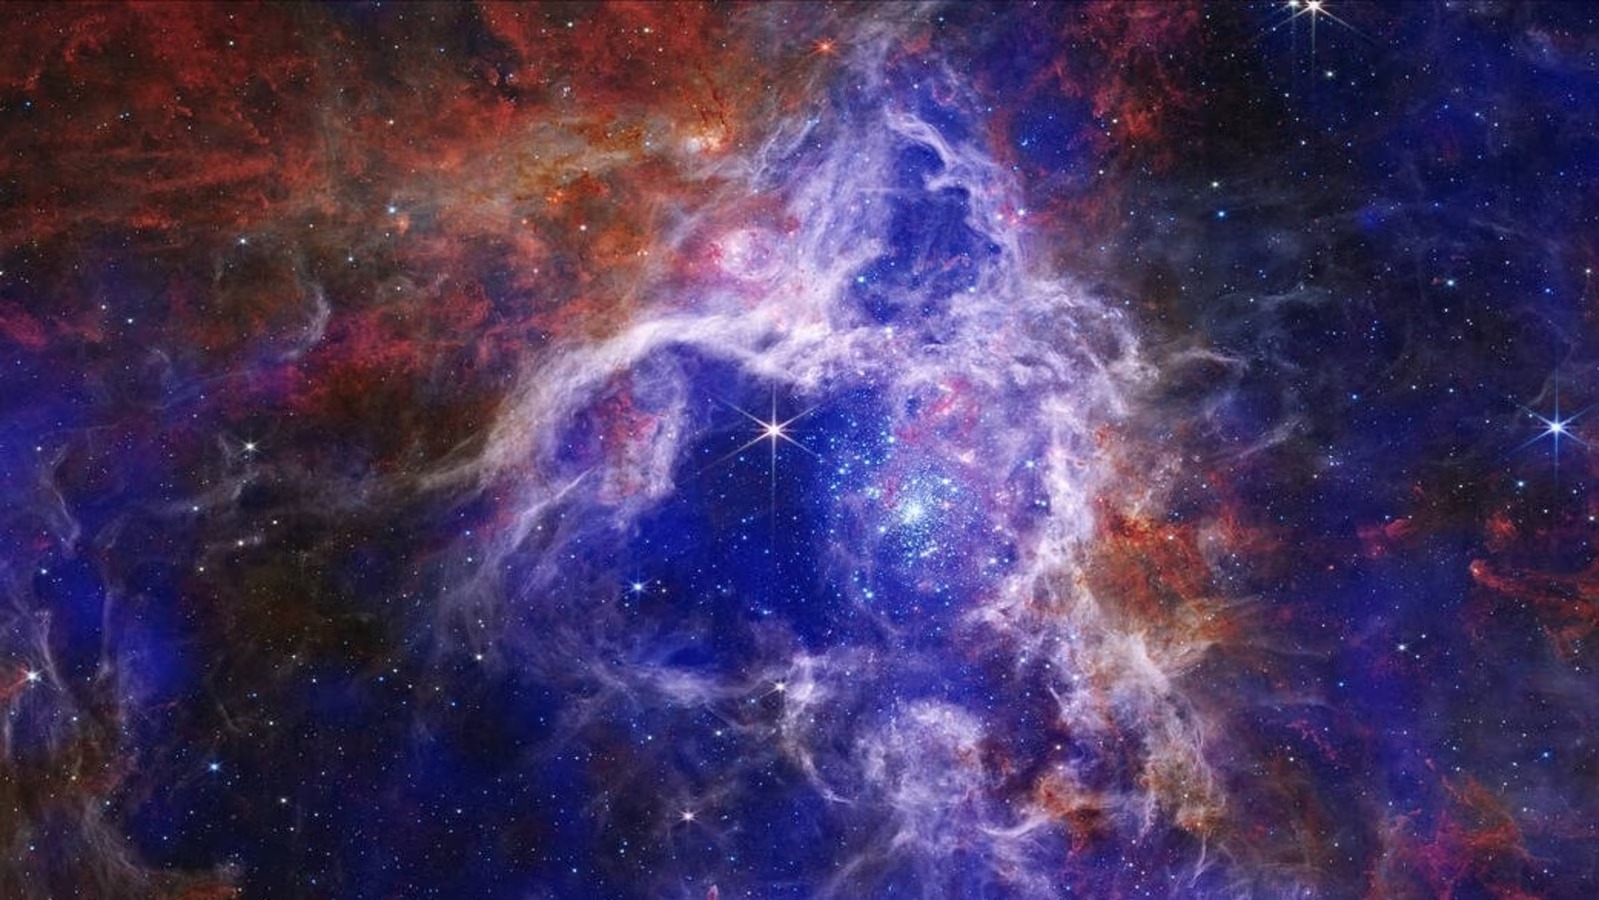 James Webb Telescope Captures New Image of Small Magellanic Cloud